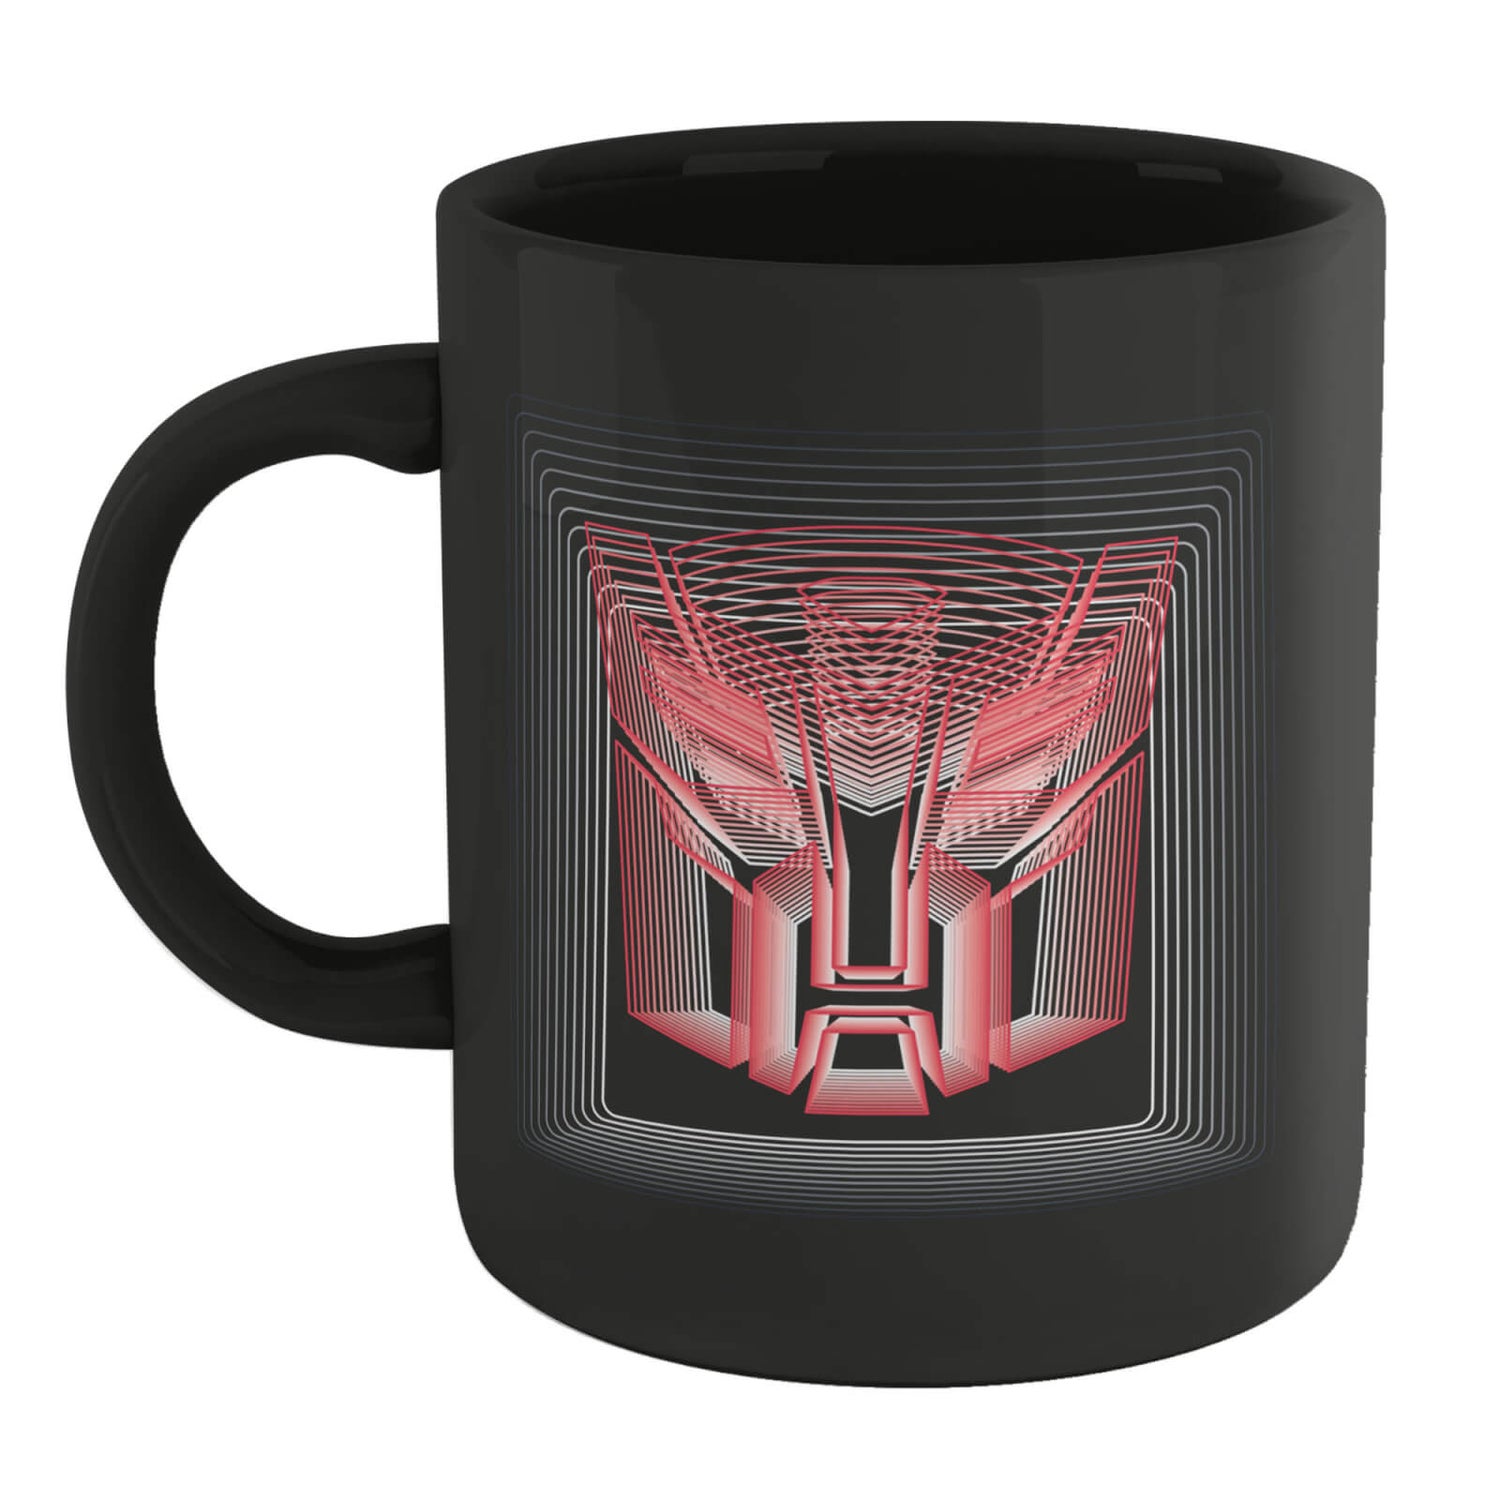 Transformers Autobots Neon Mug - Black